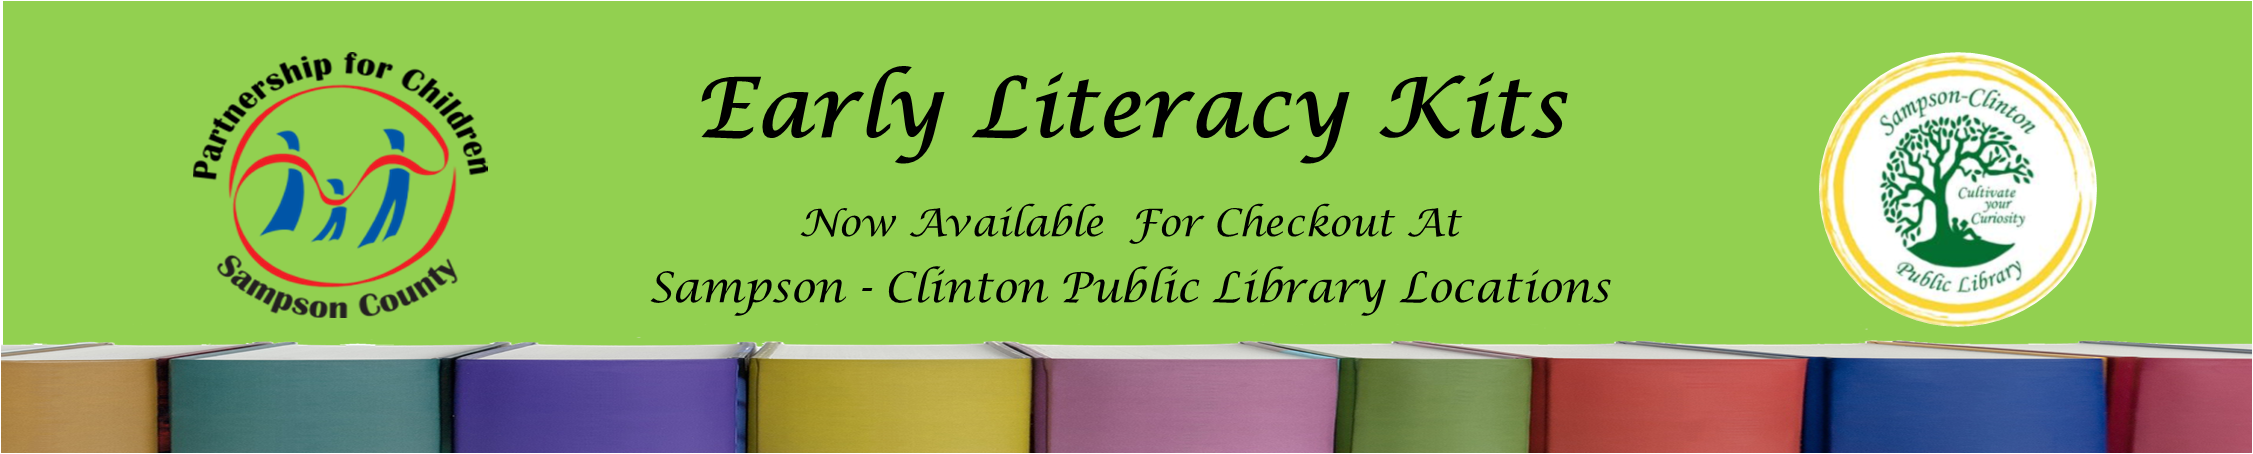 Sampson-Clinton Early Literacy Kits Banner